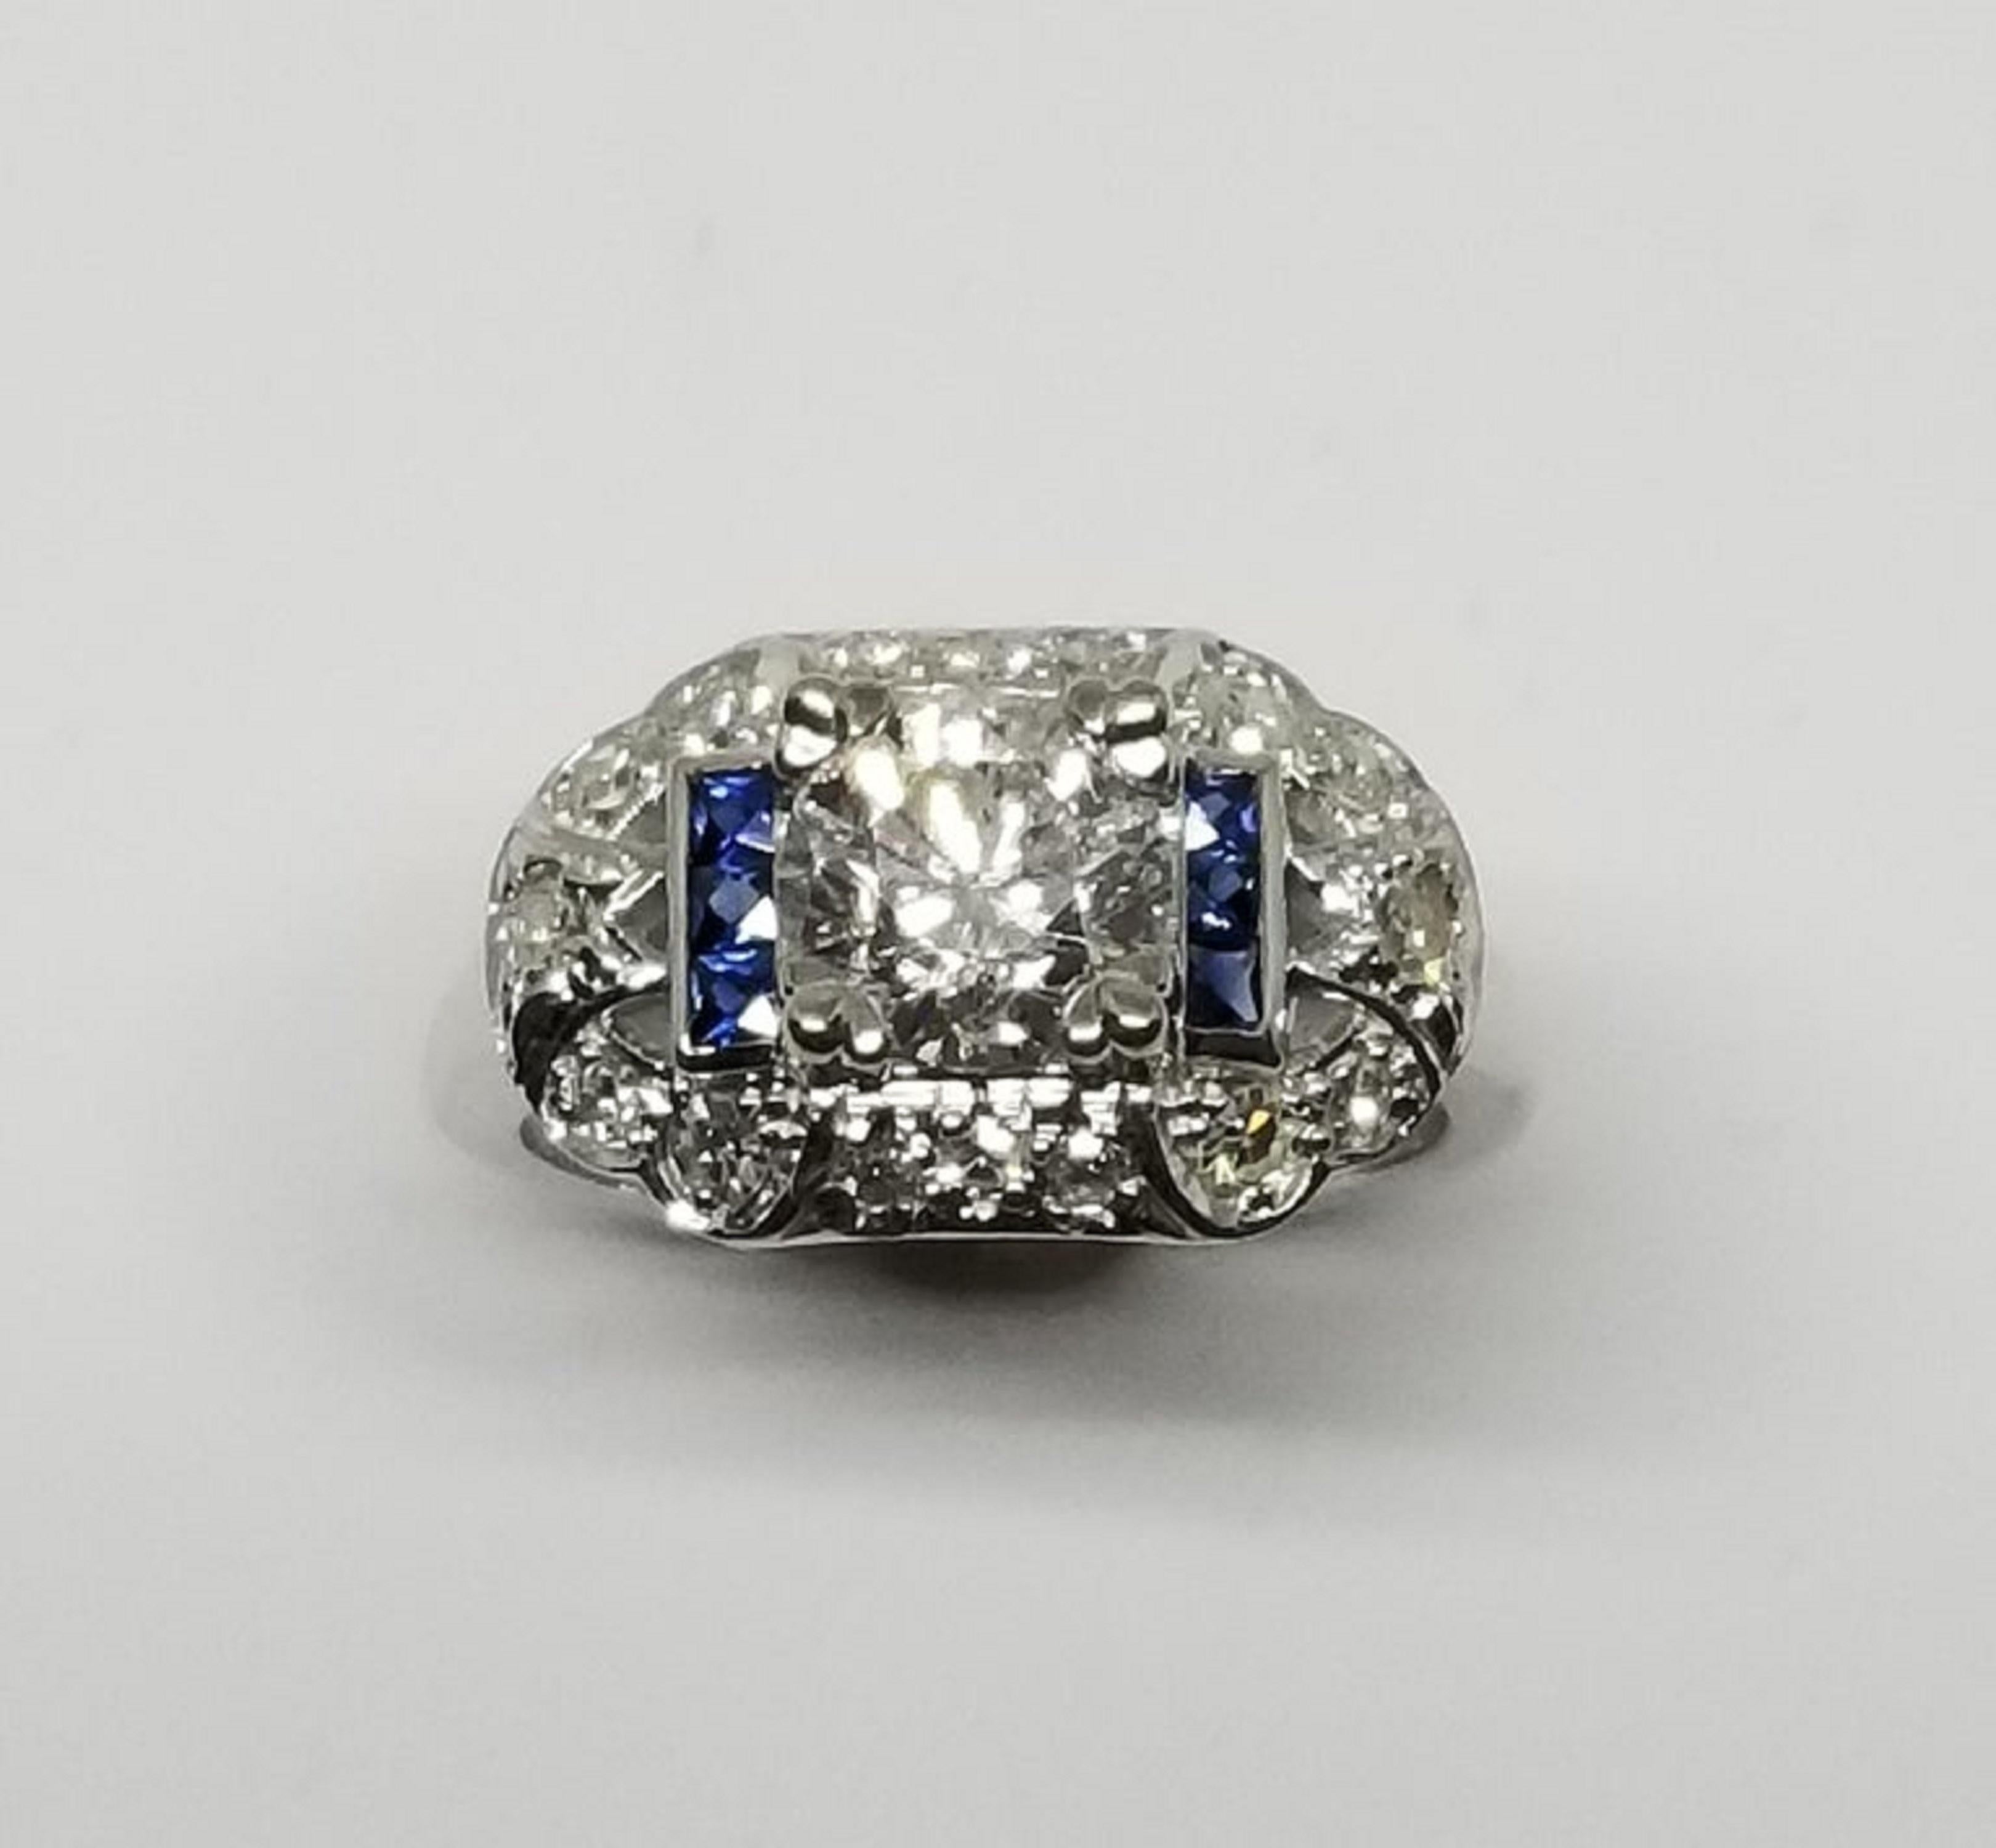 14k white gold ladies diamond Art Deco Style ring, containing 1 brilliant cut diamond; weight 1.15, color 